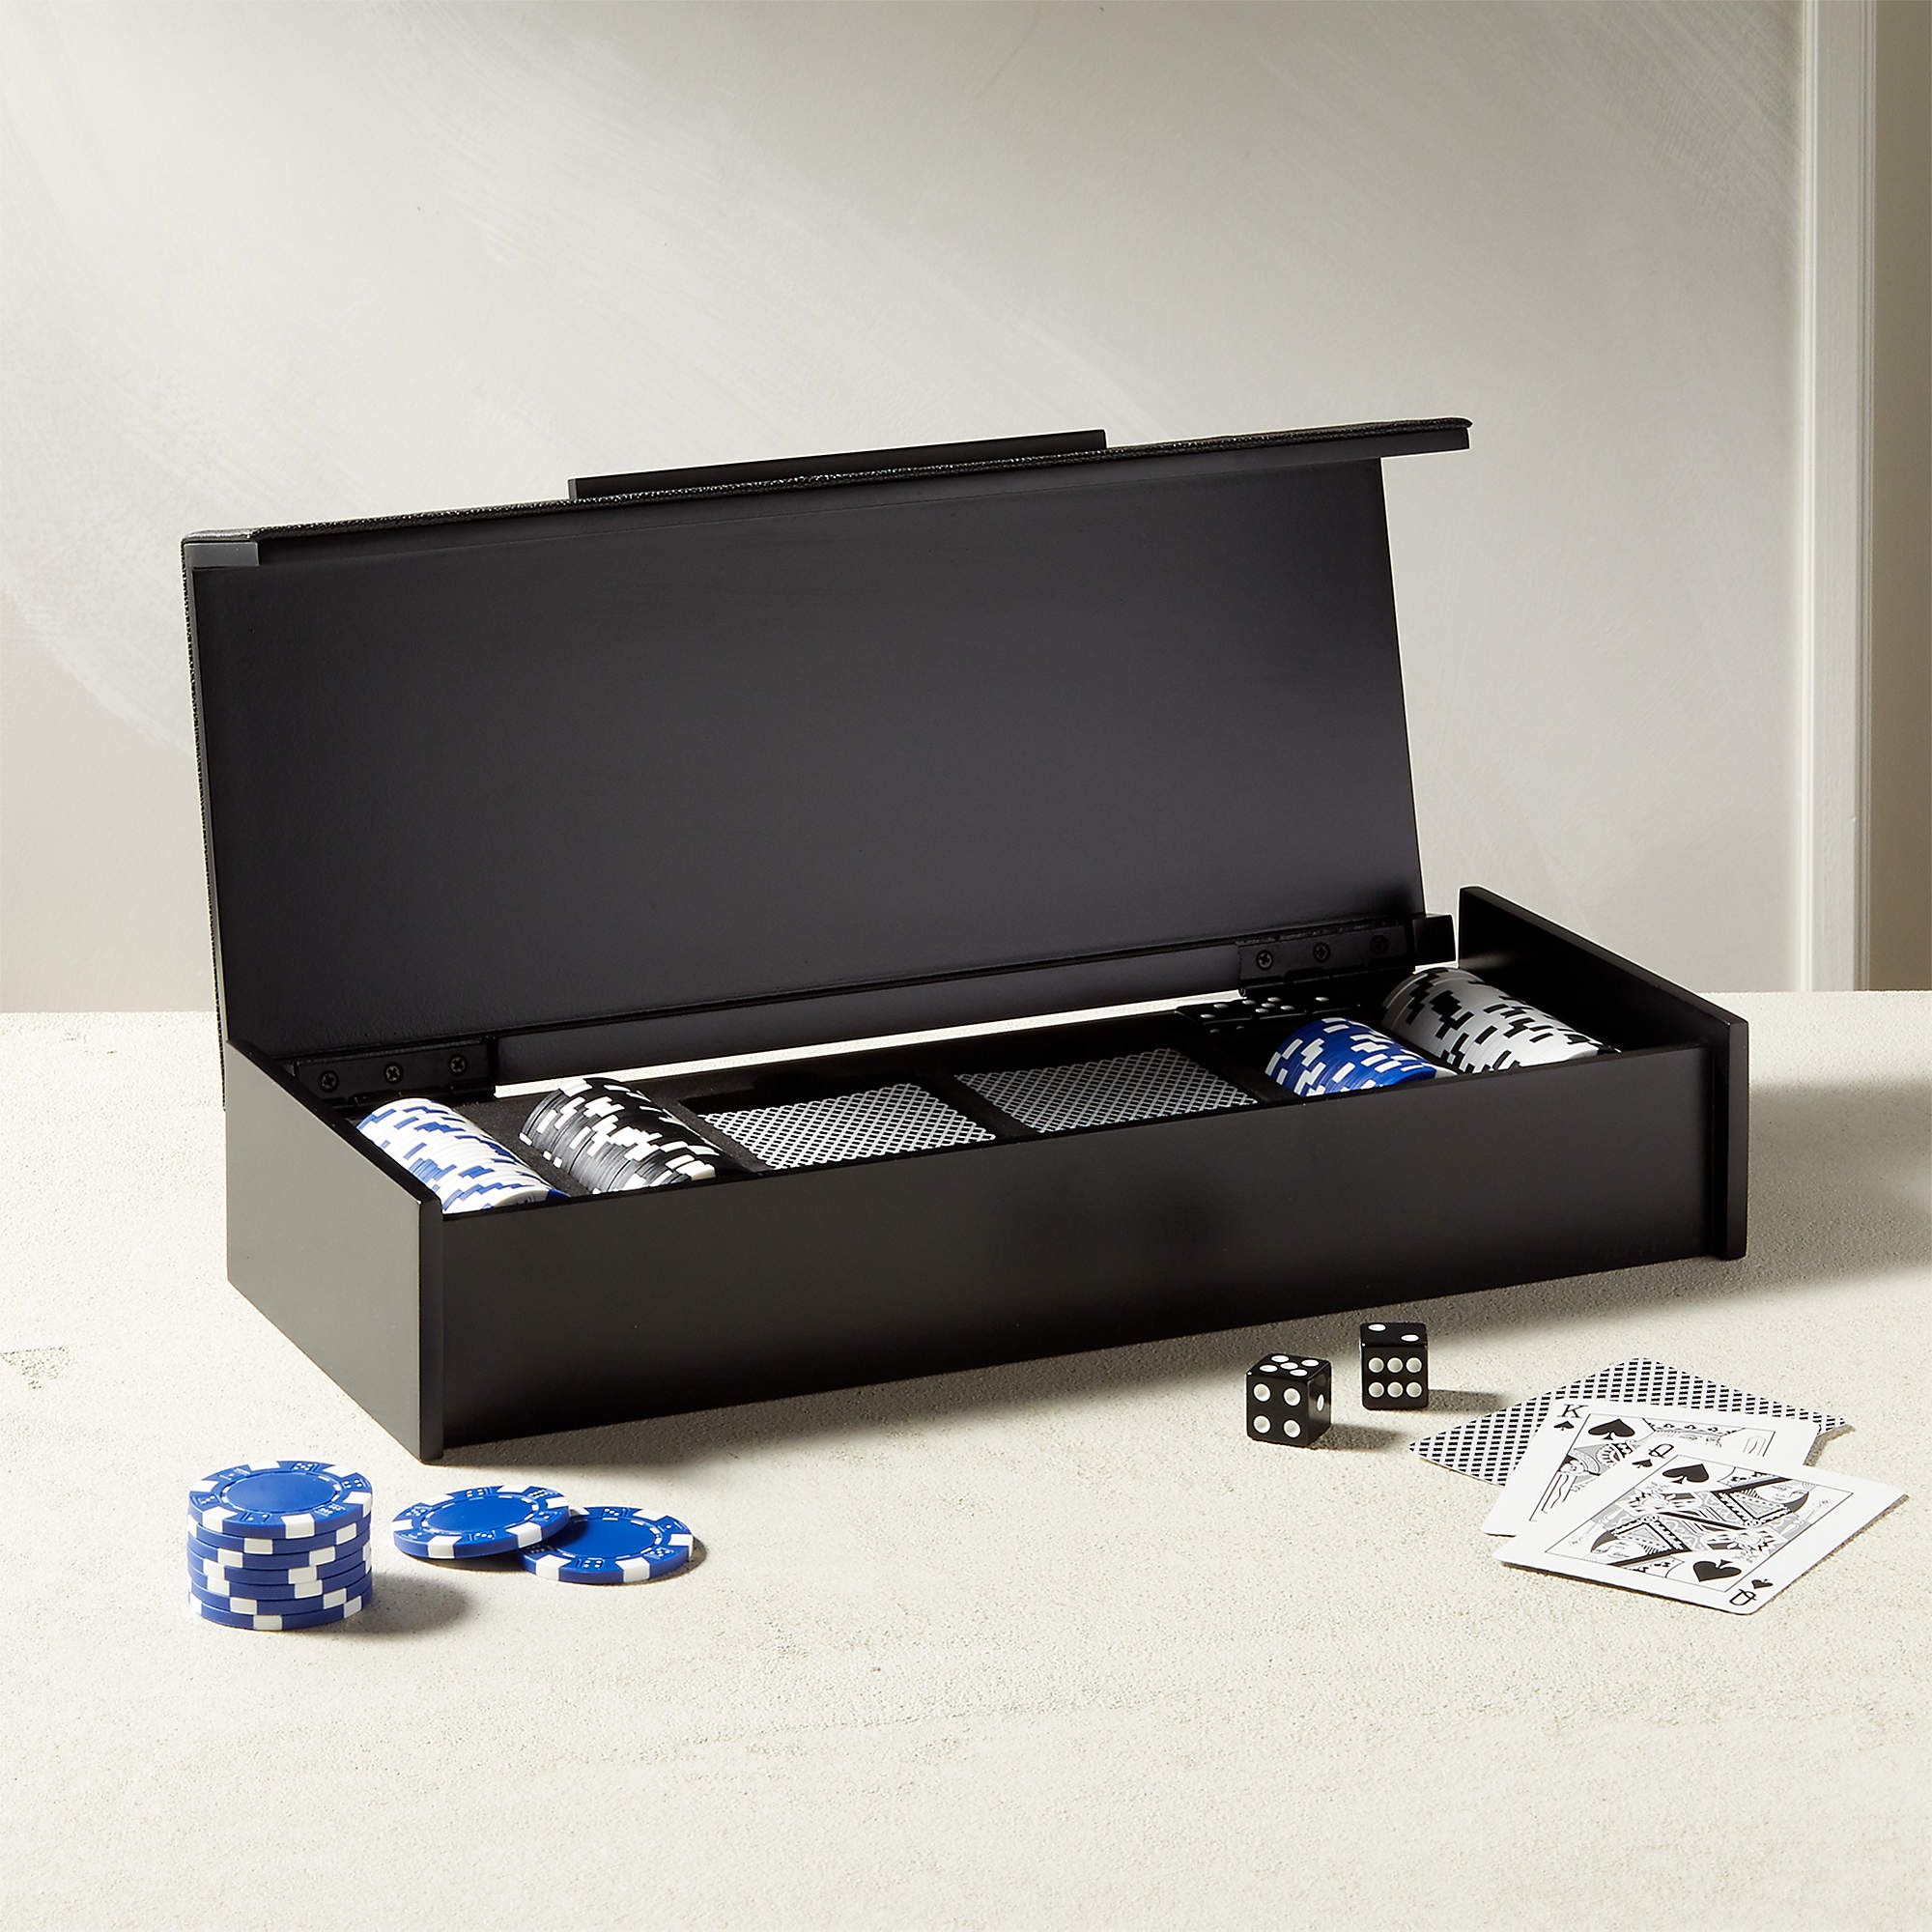 Shagreen Poker Set